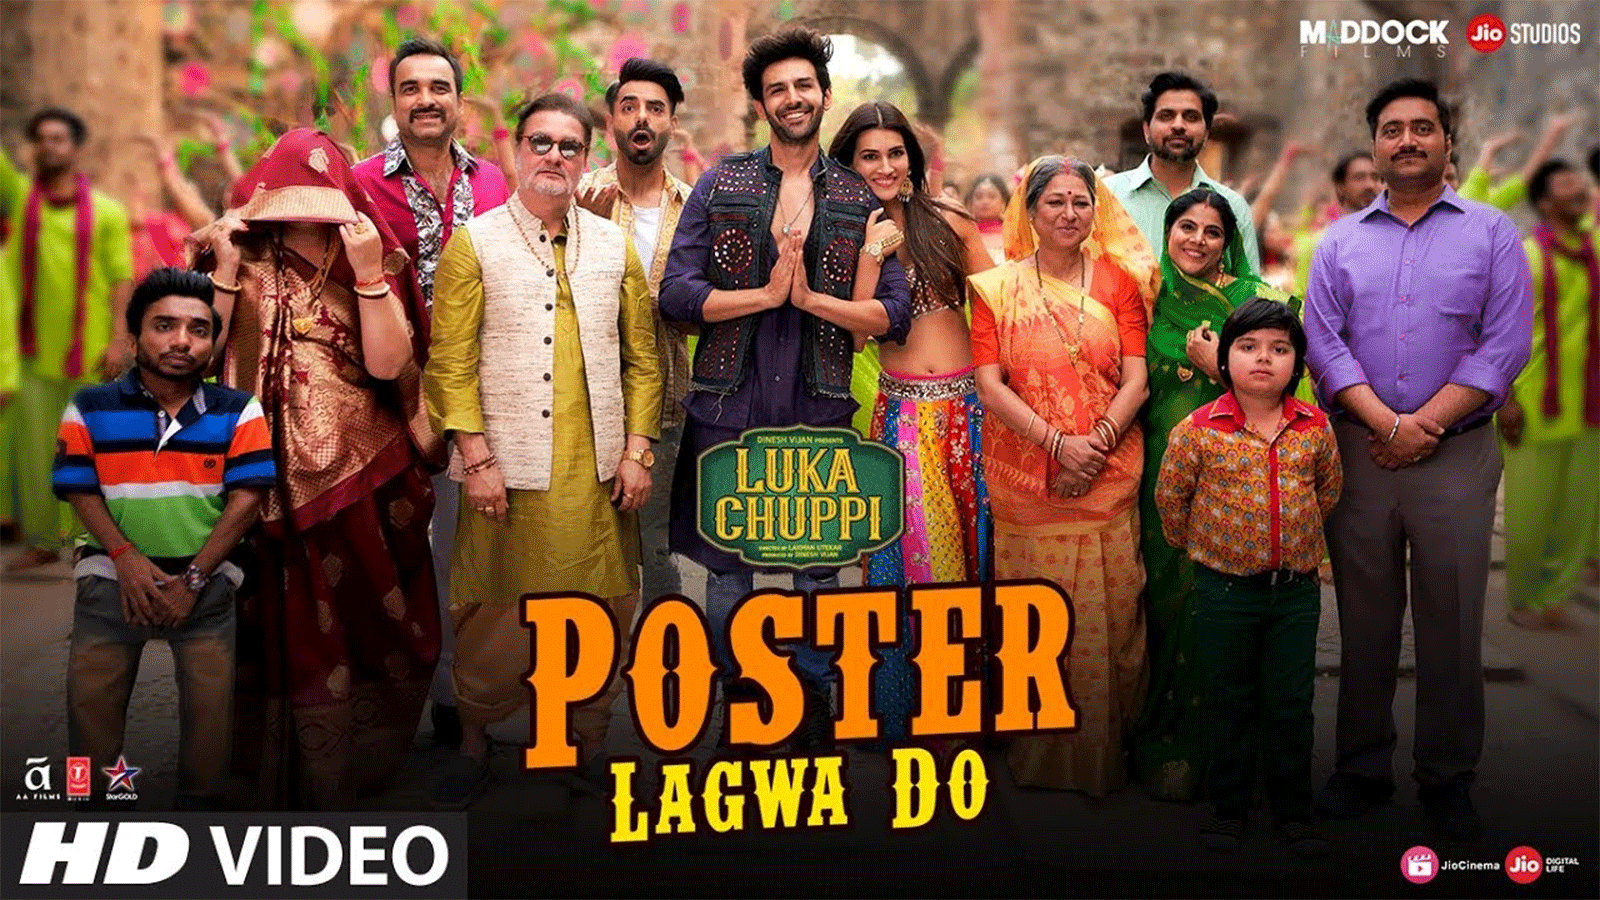 Luka Chuppi | Song - Poster Lagwa Do | Hindi Video Songs - Times of India